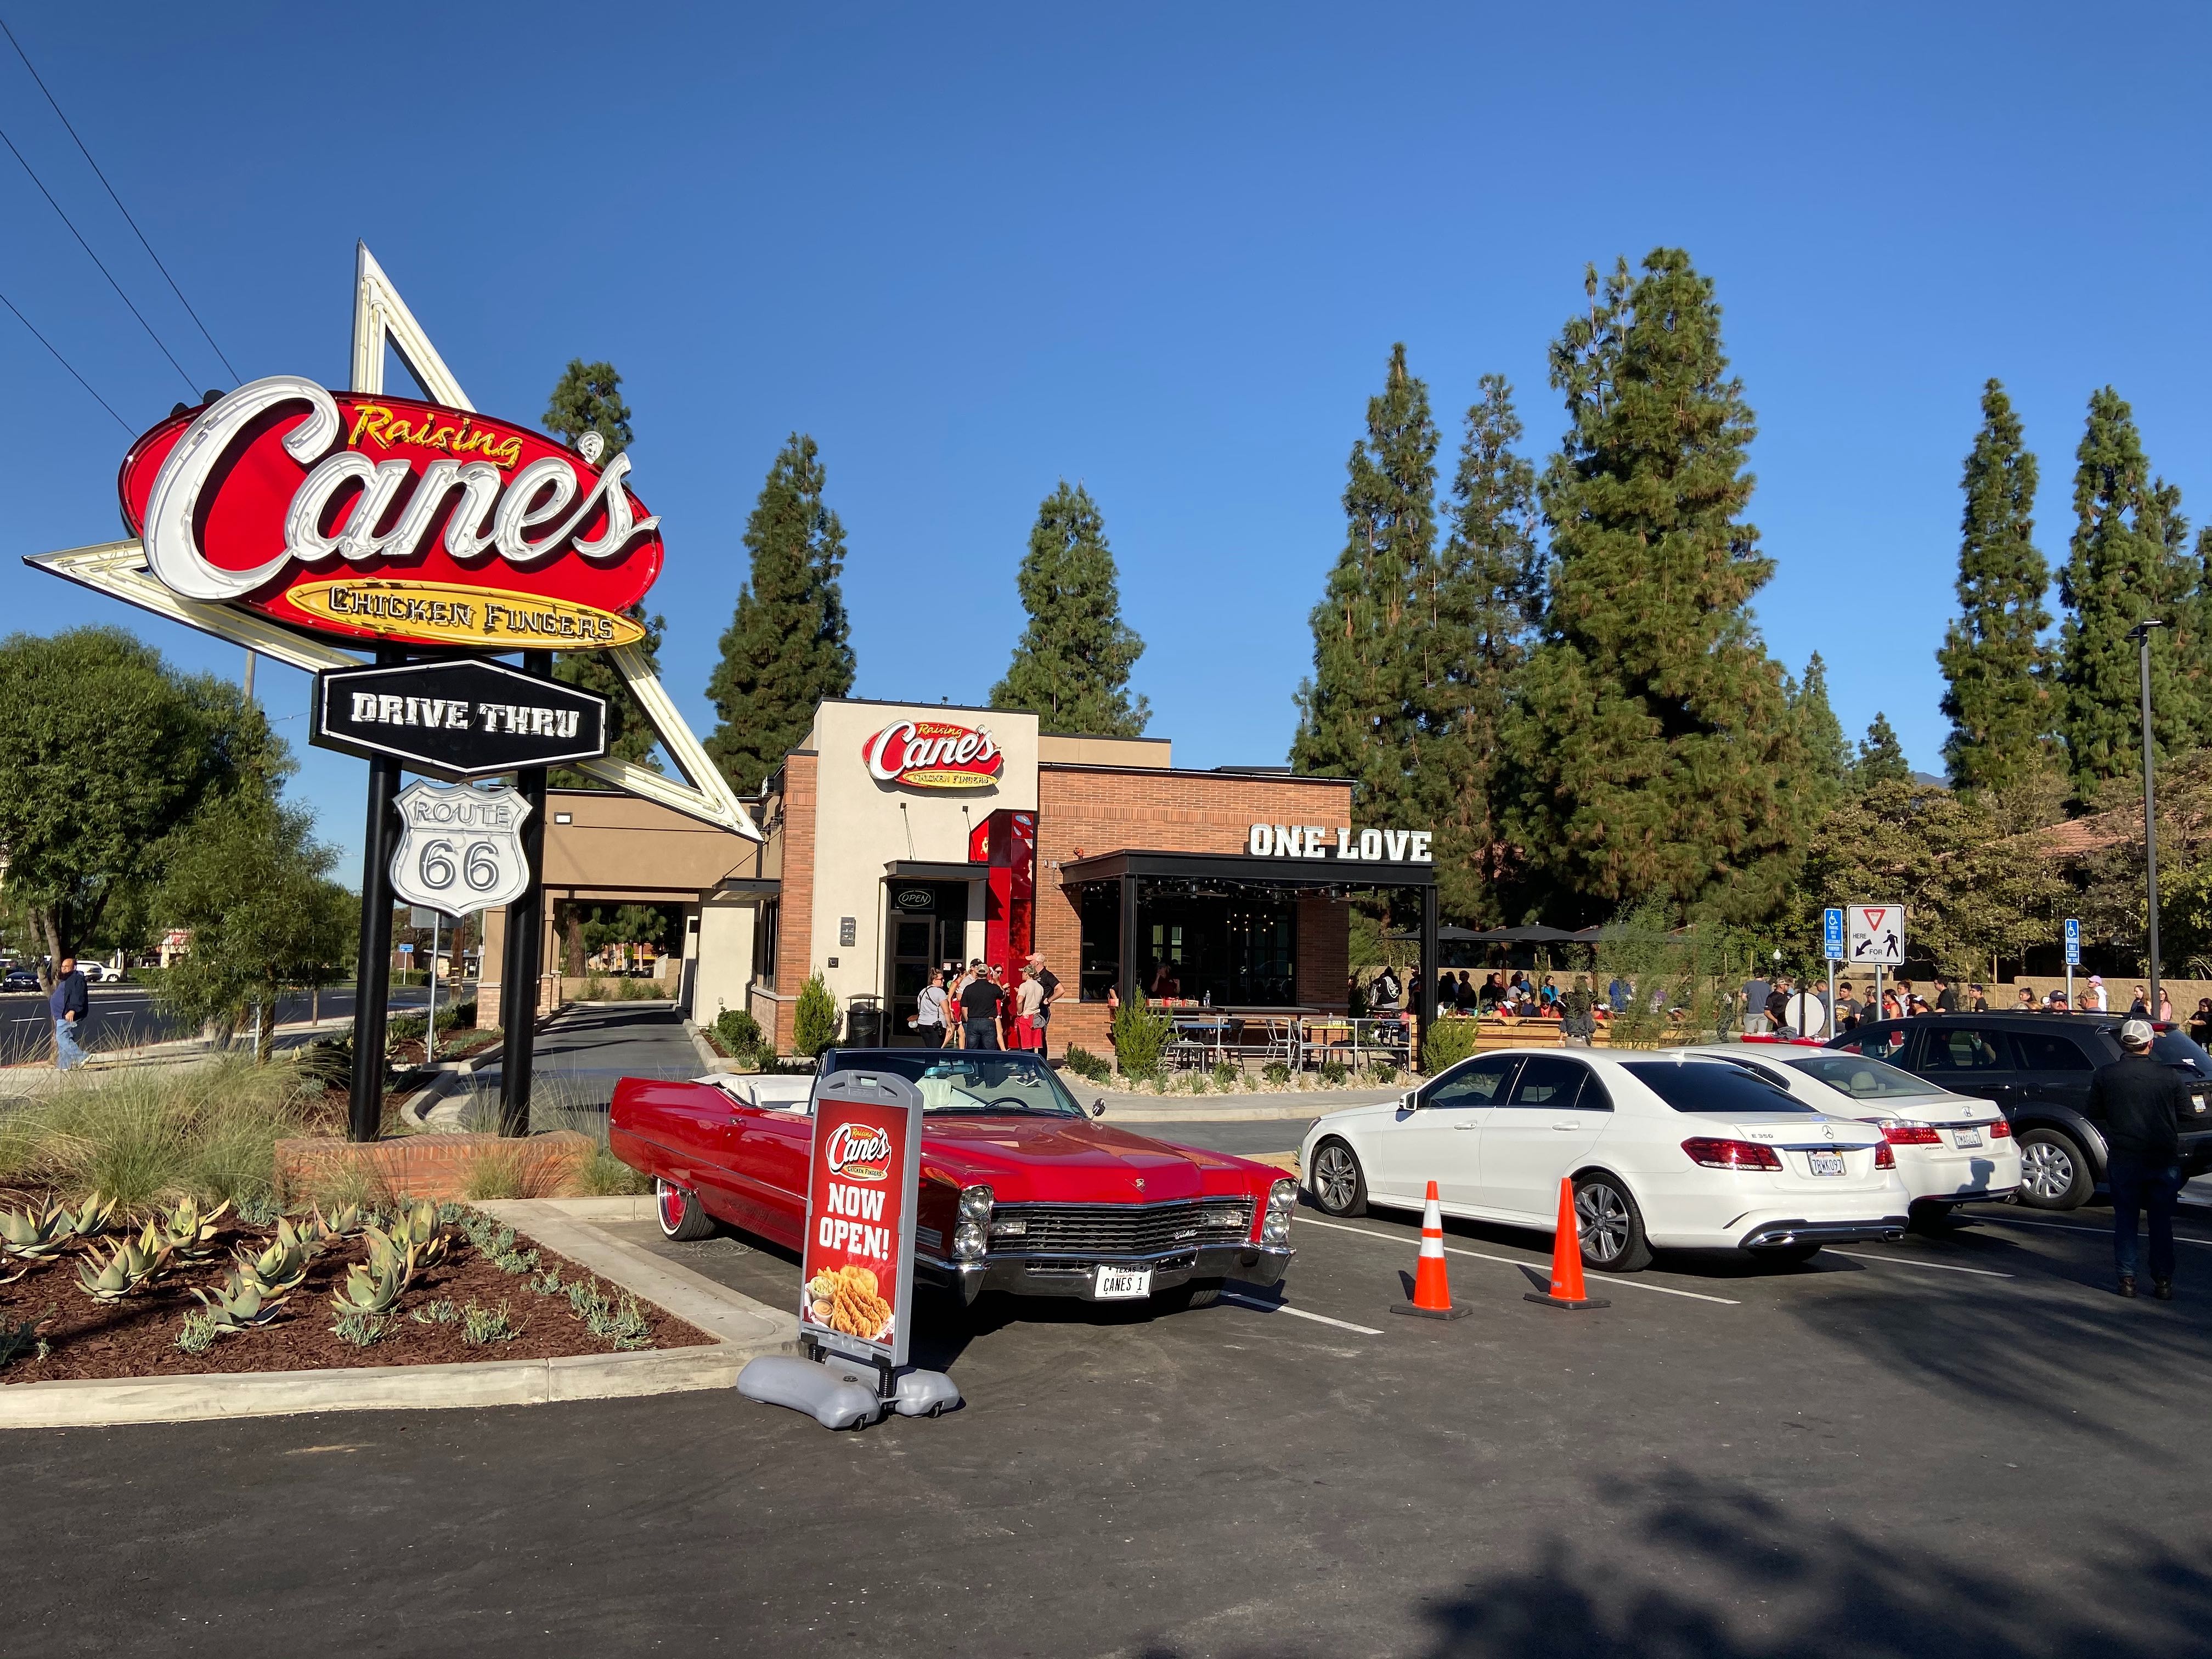 Raising Cane’s Chicken Fingers opens its twentieth California location